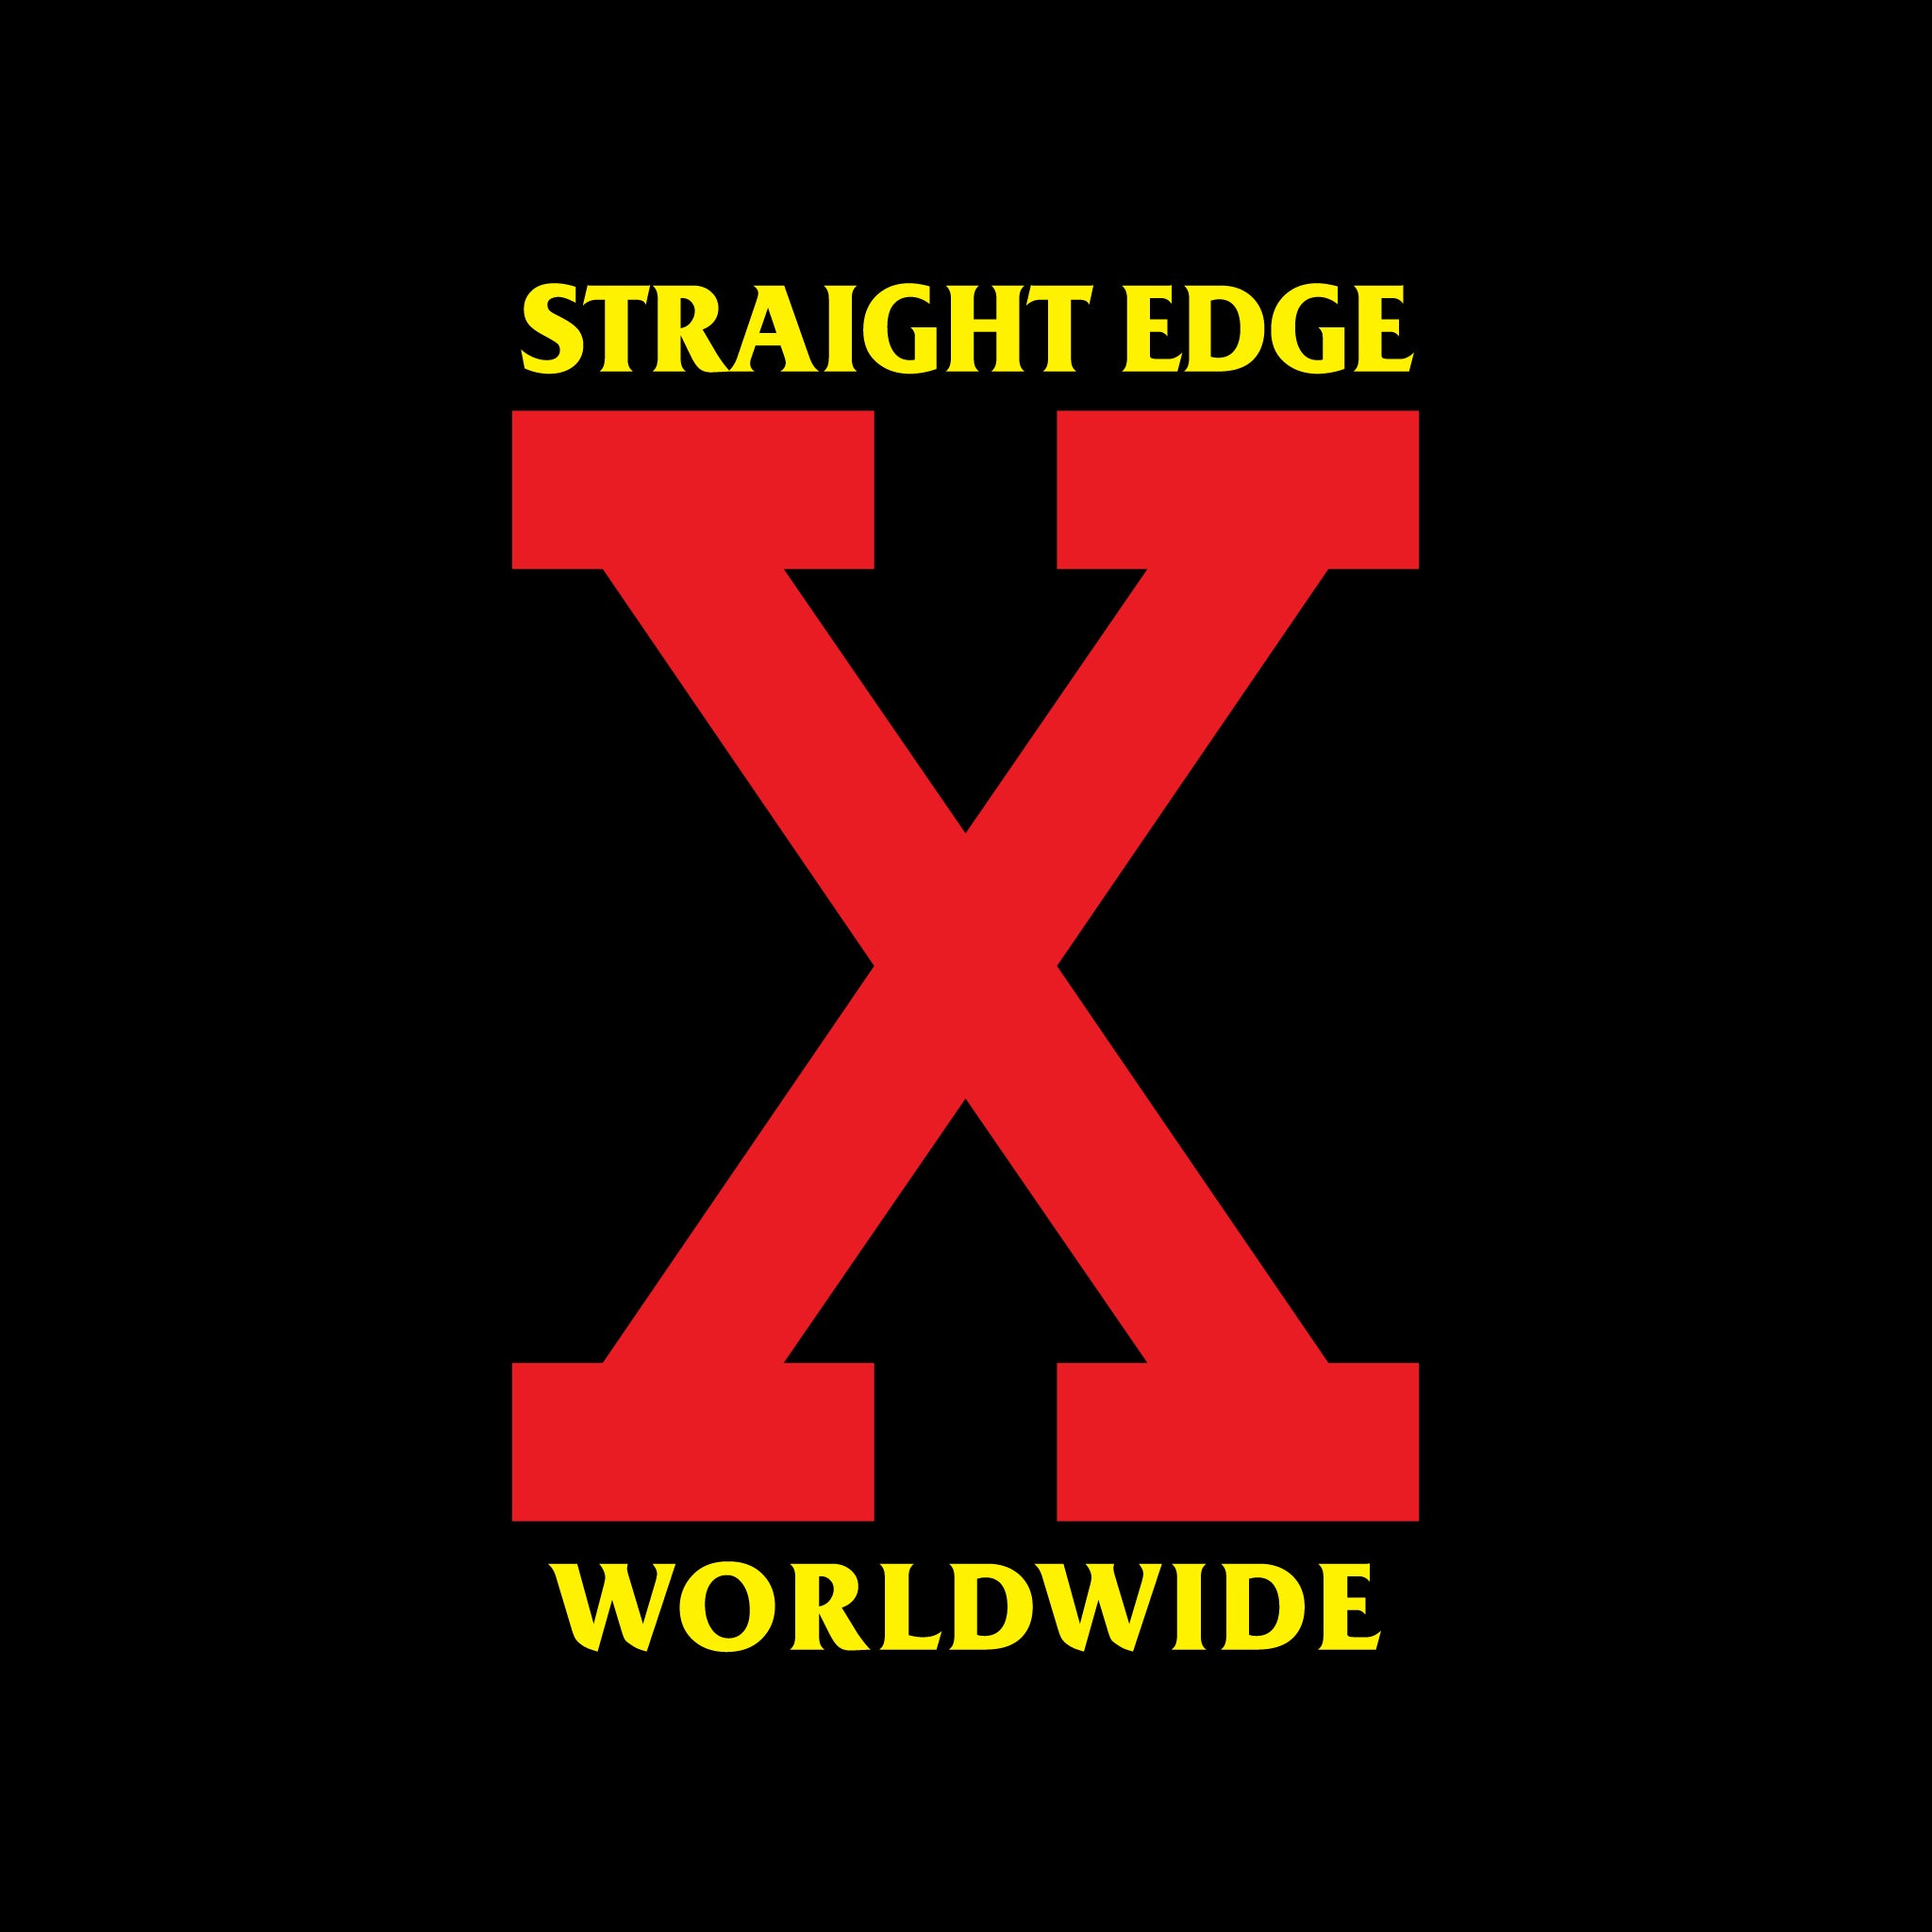 Straight Edge Worldwide logo by STRAIGHTEDGEWORLDWIDE